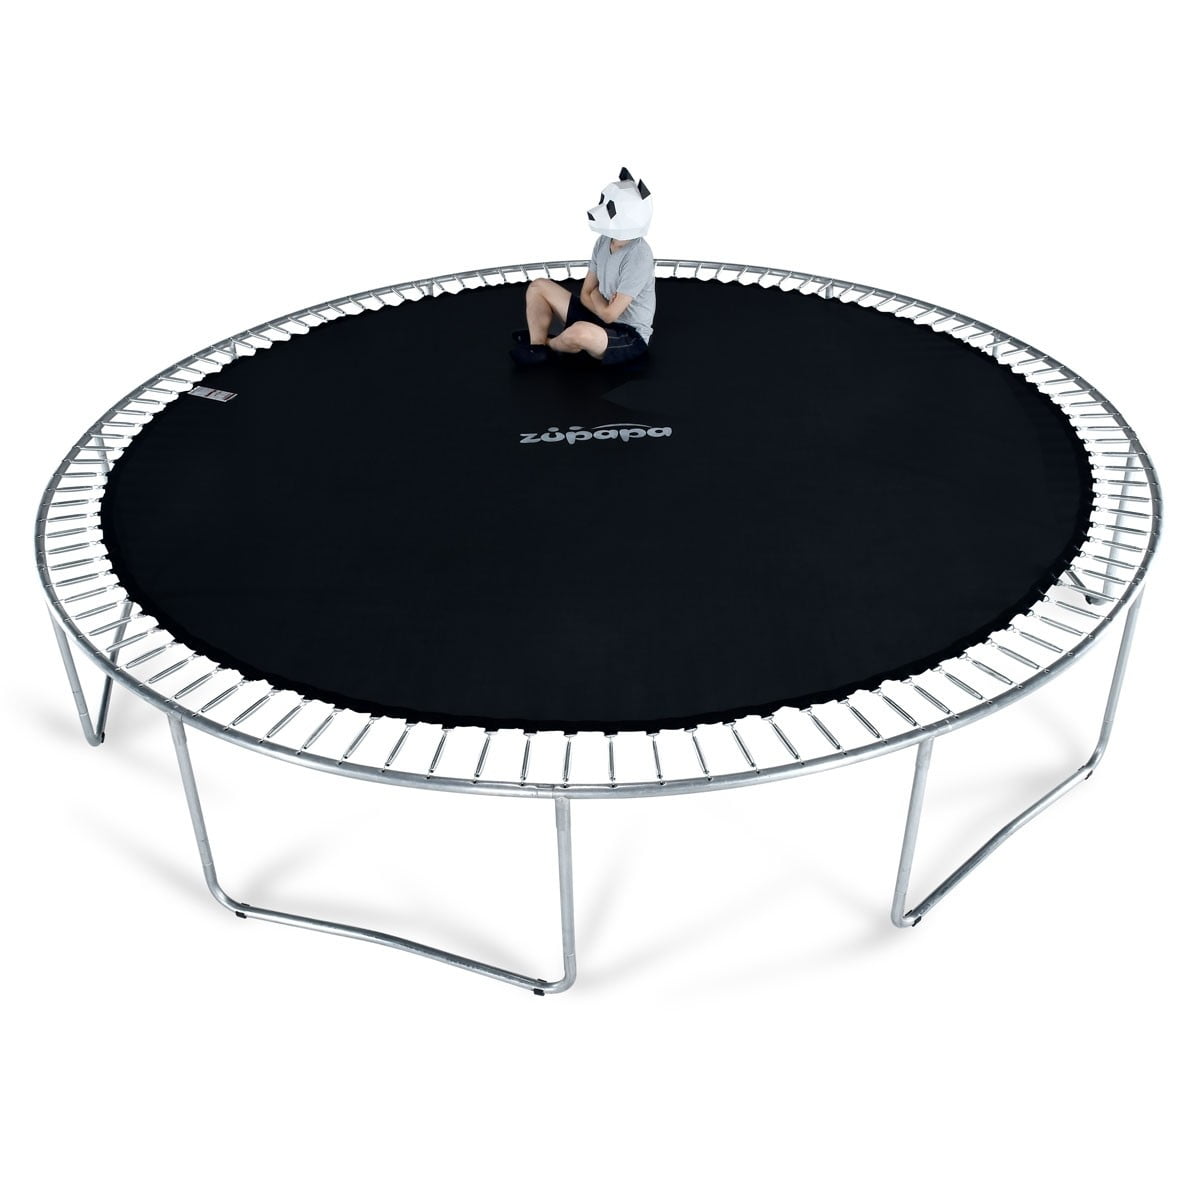 Sportpower Trampoline replacement matt for 10ft trampoline 